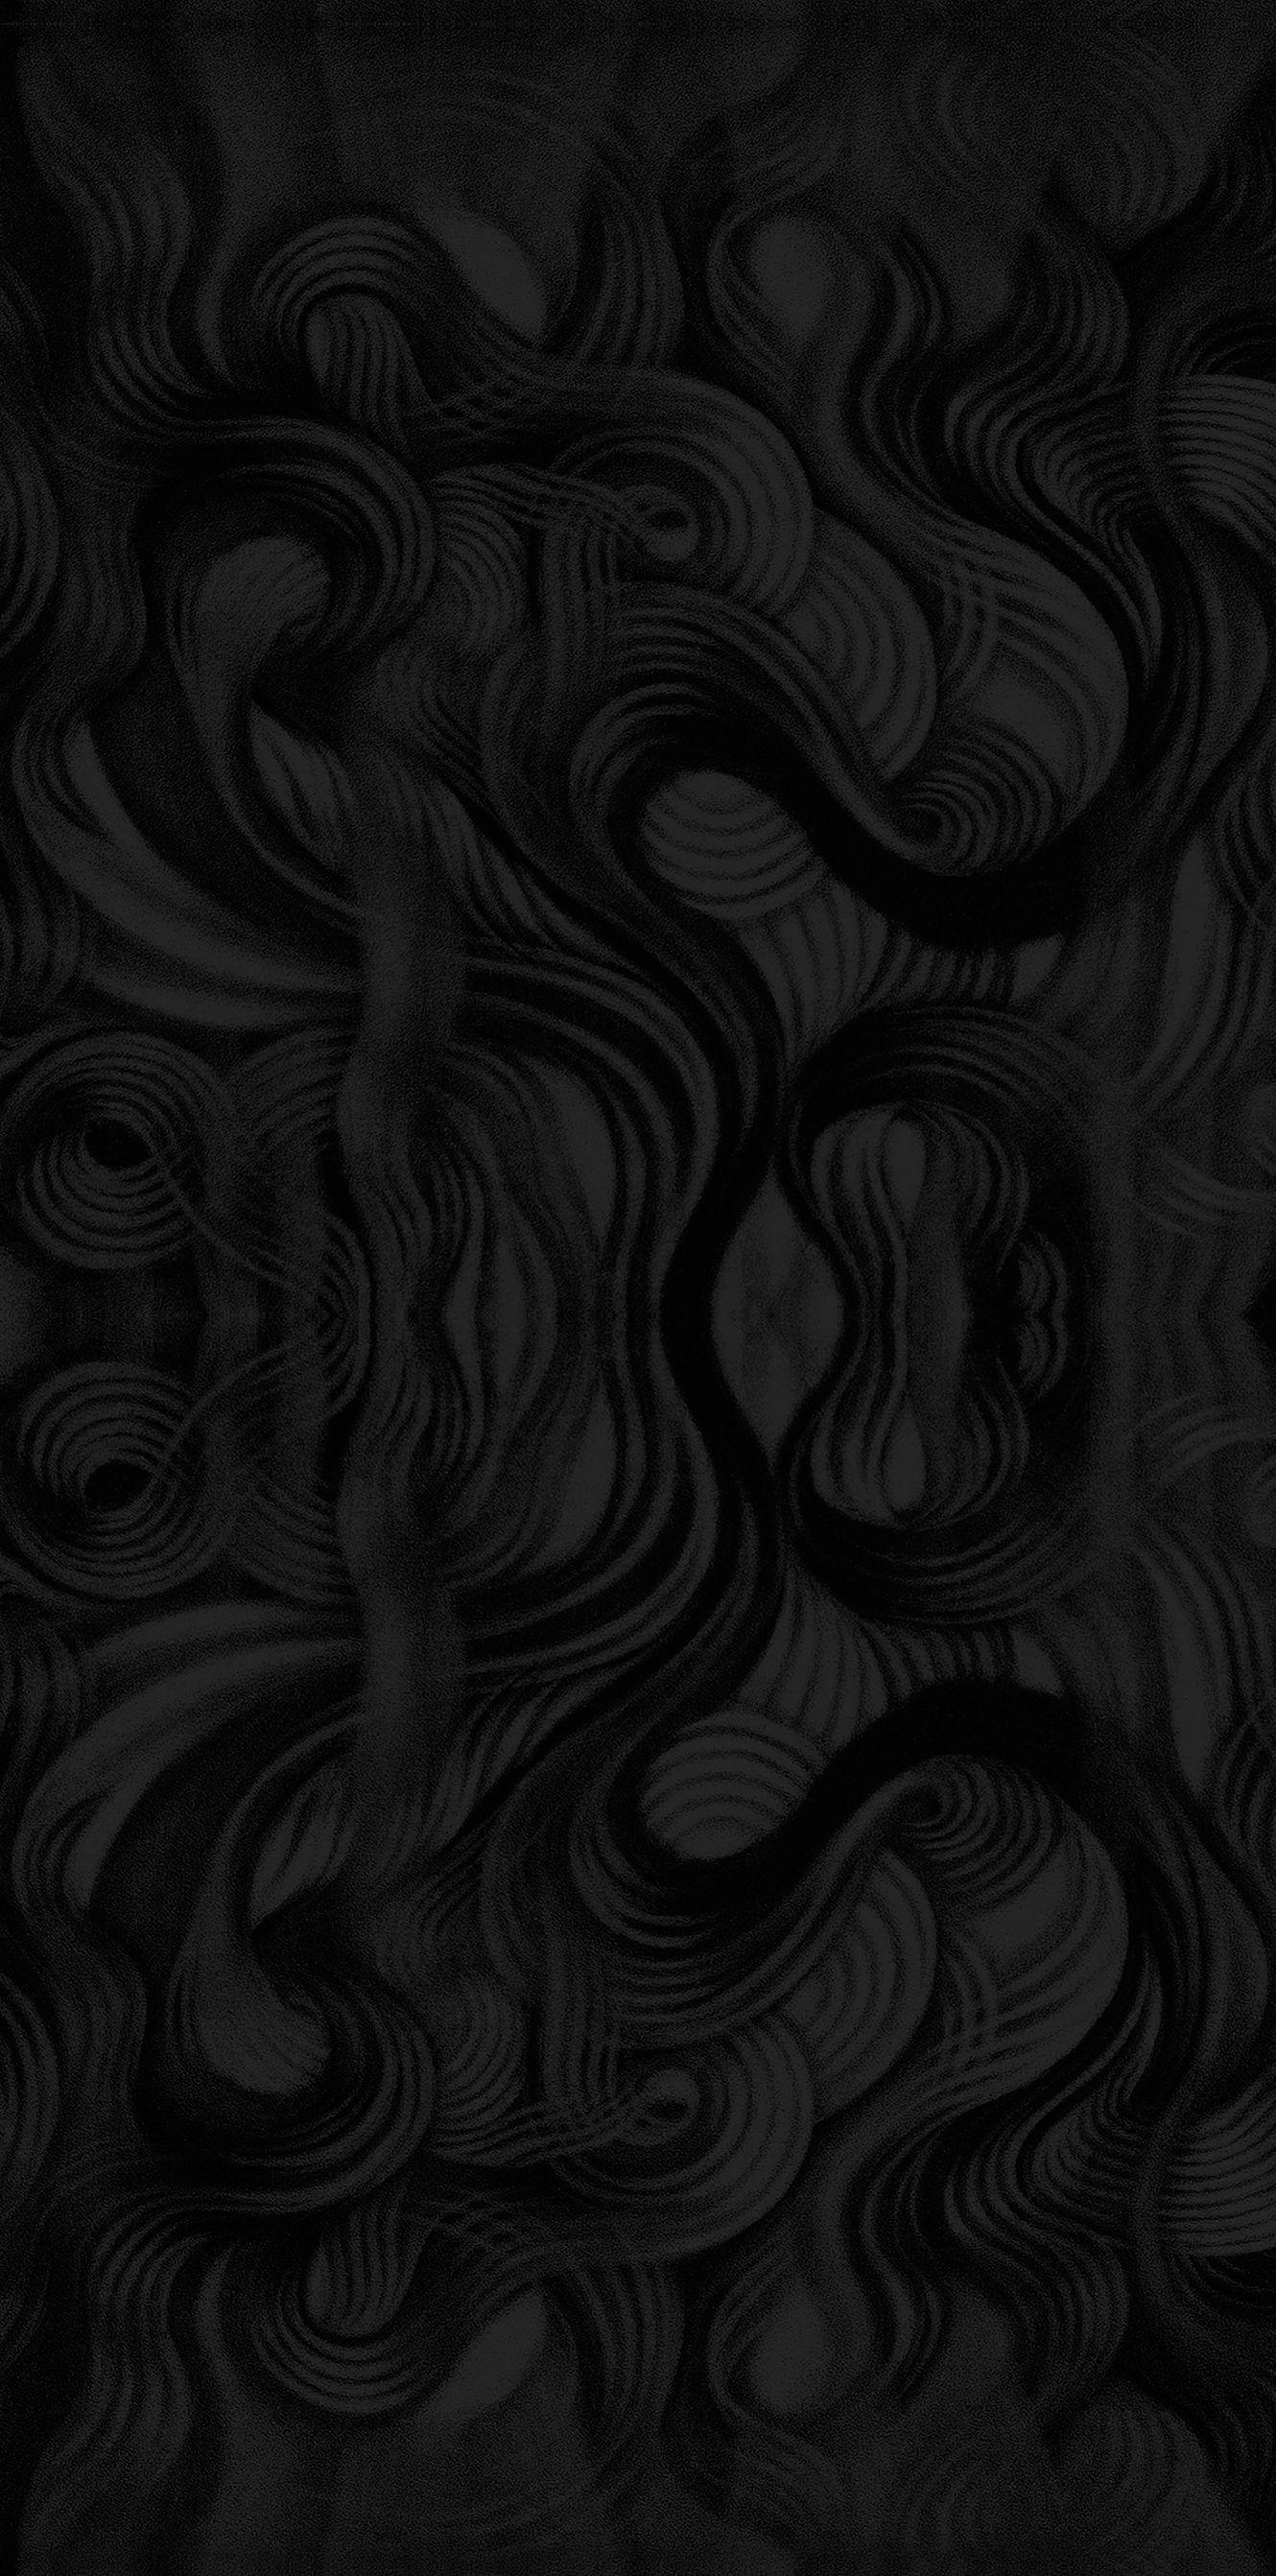 Music Gojira wallpaper  2560x1600  196856  WallpaperUP